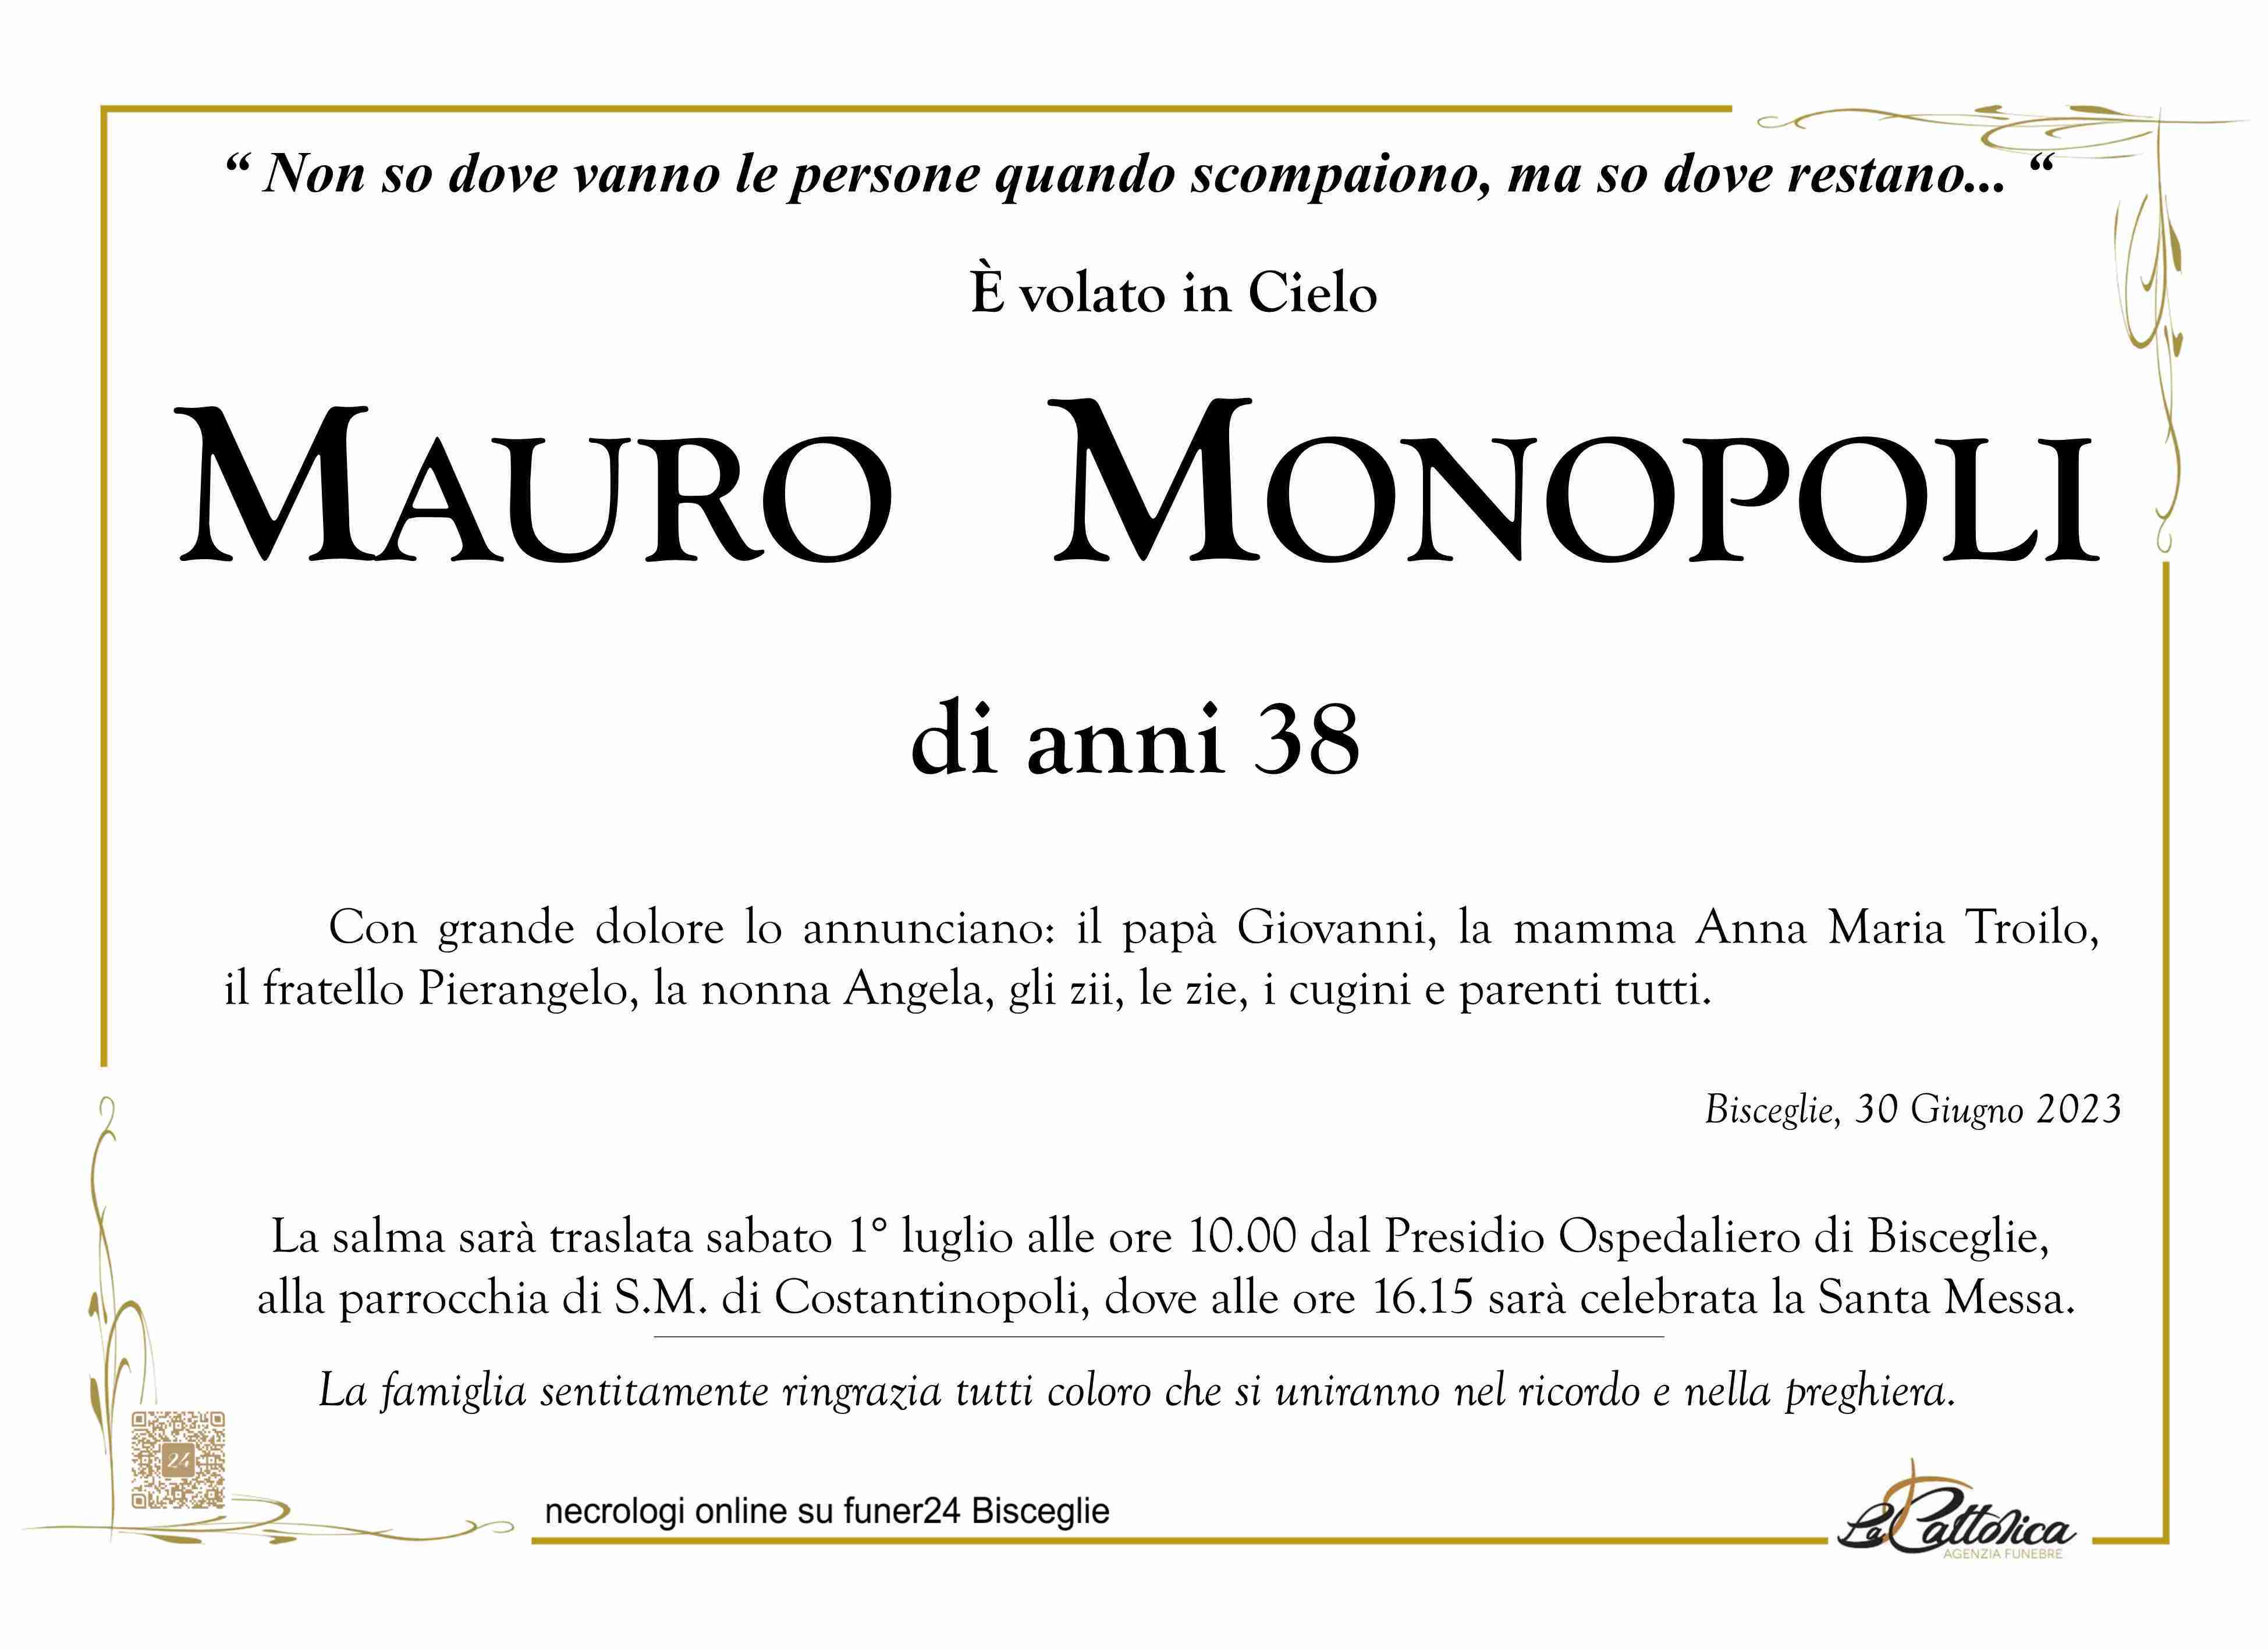 Mauro Monopoli